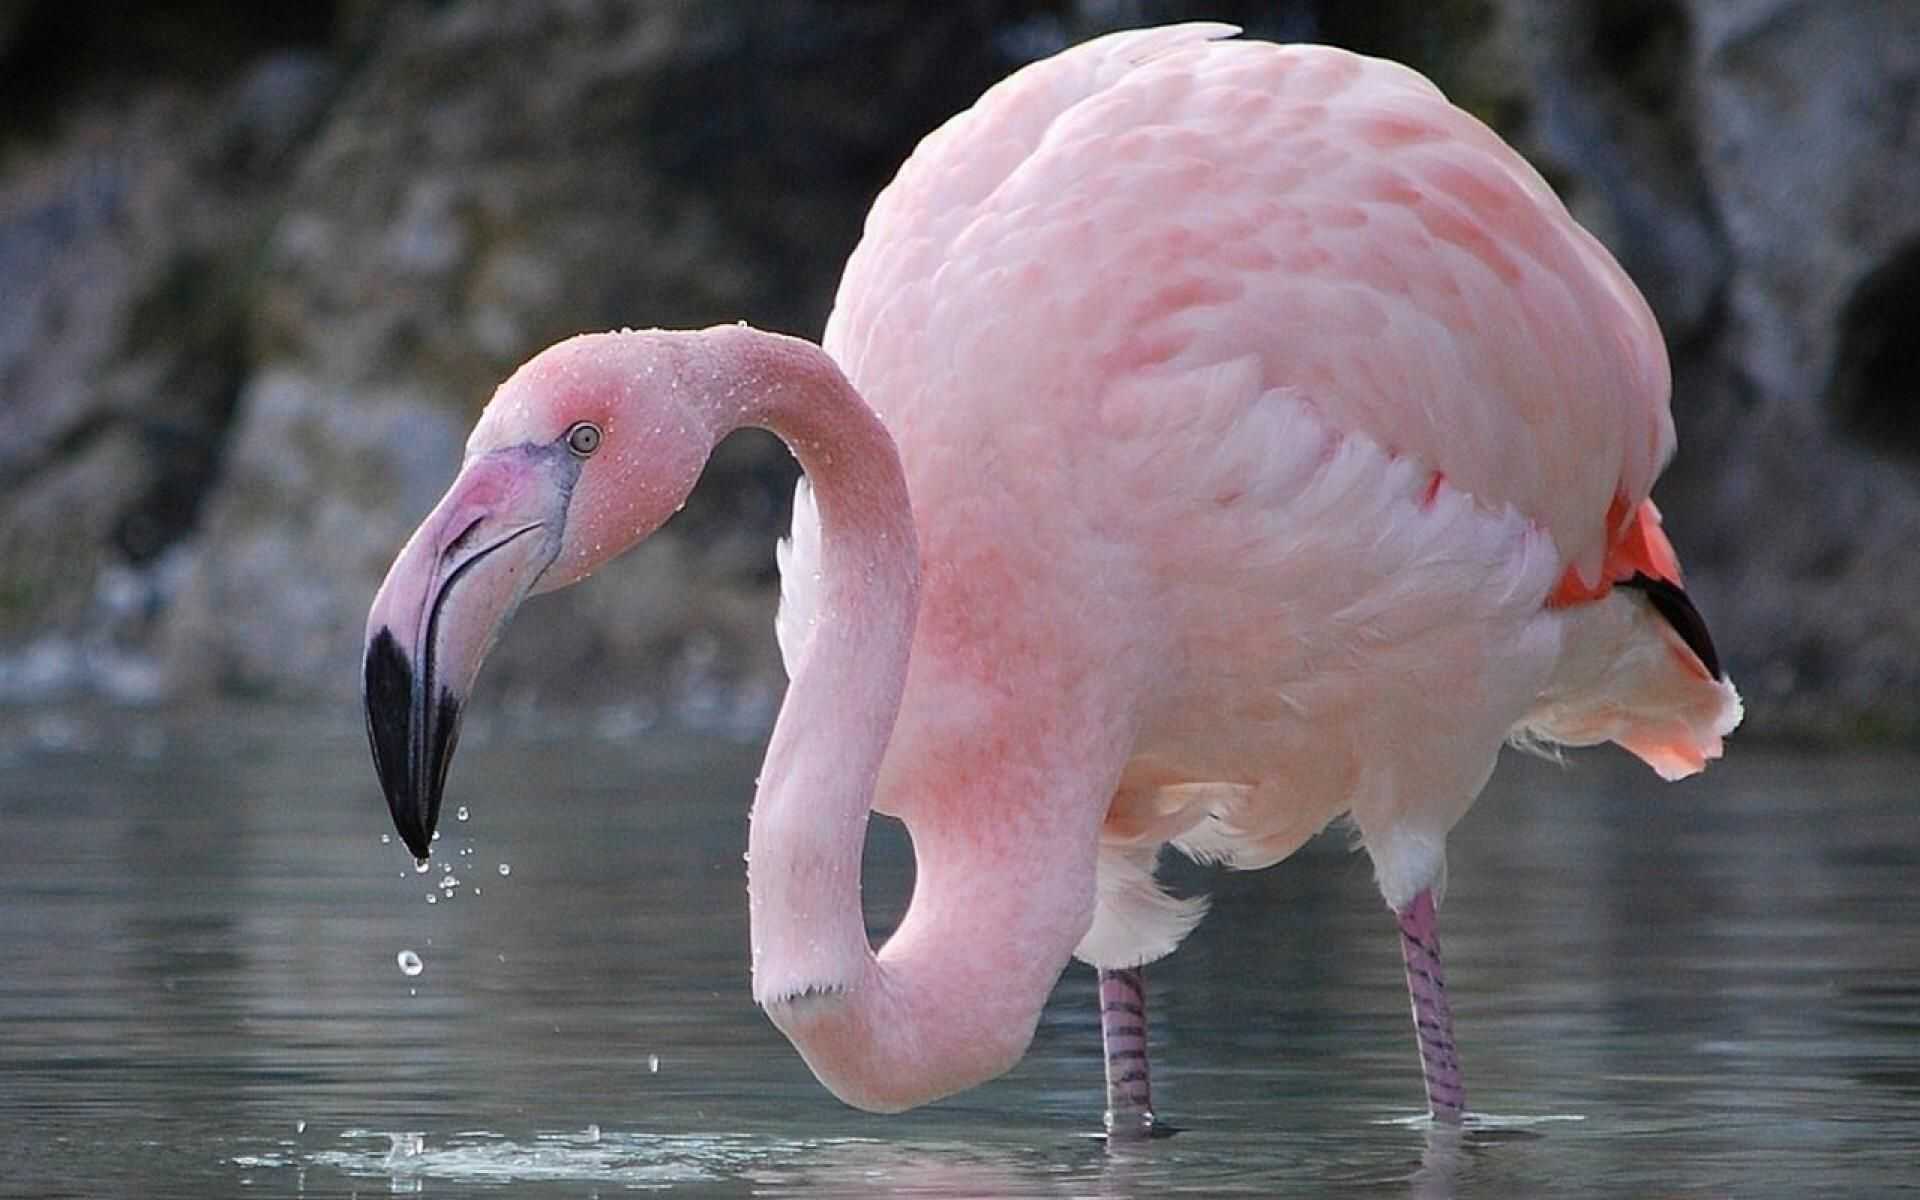 Розовый фламинго. образ жизни и среда обитания розового фламинго